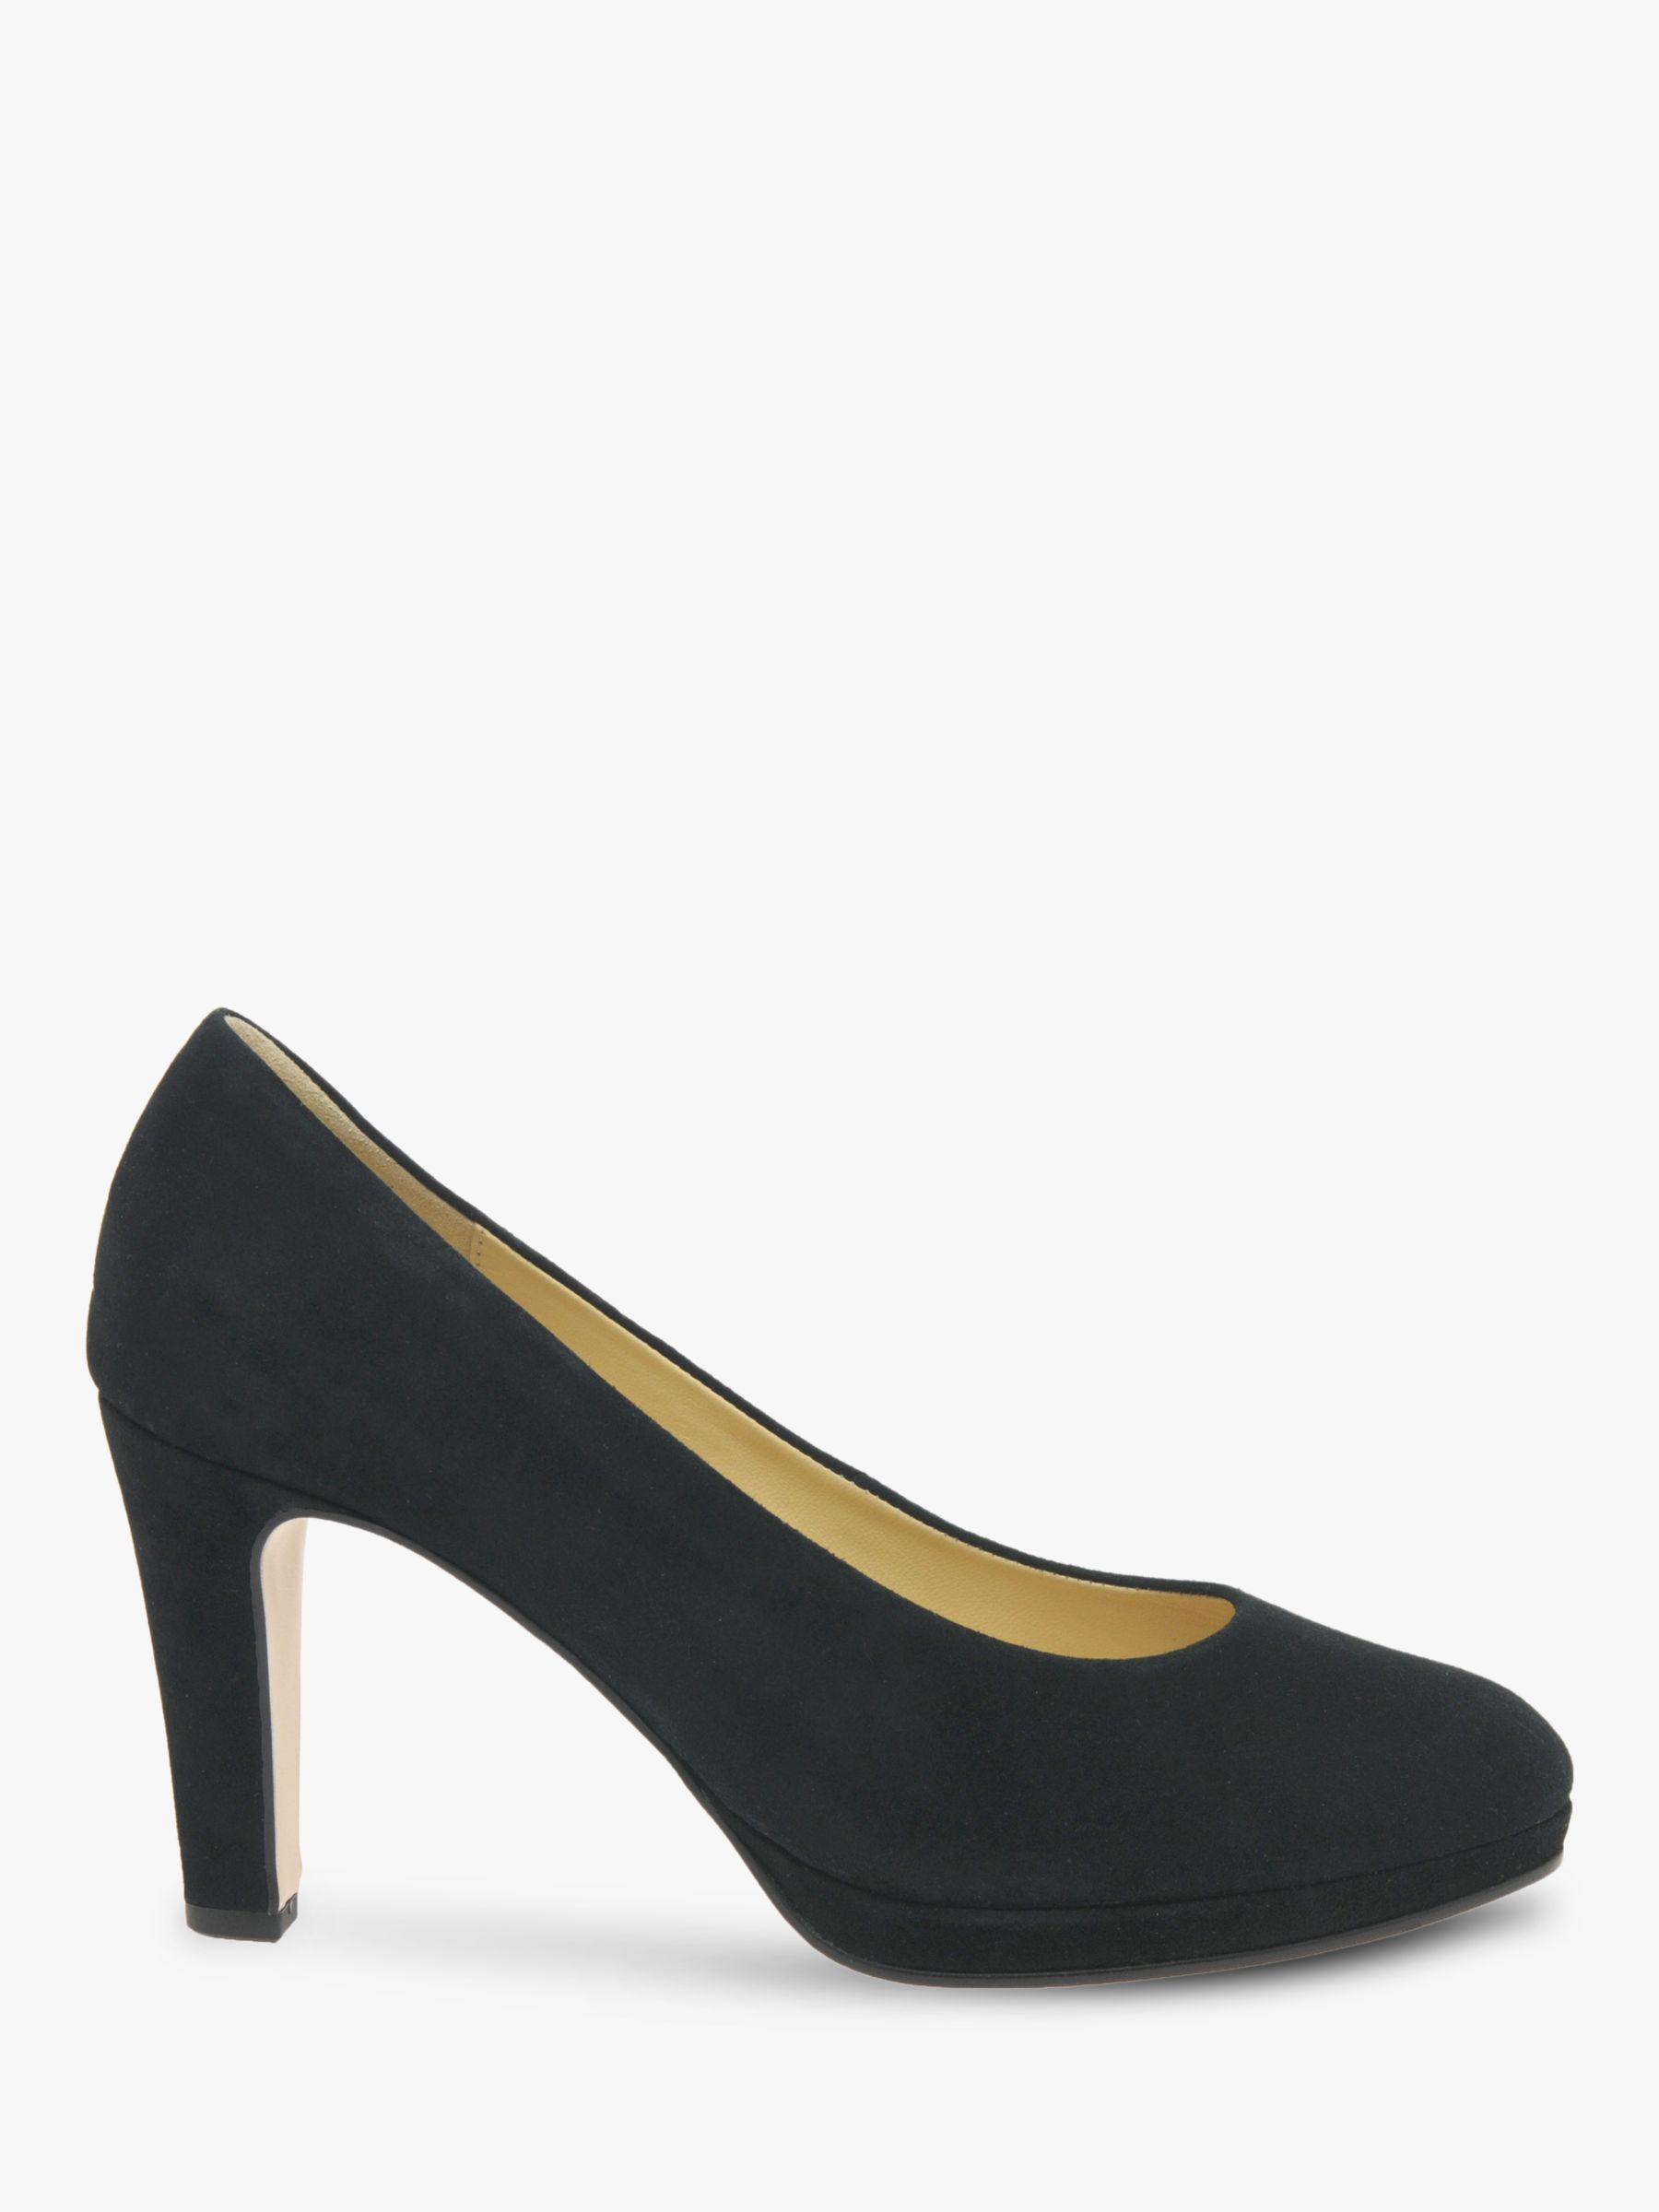 Gabor Splendid Block Heeled Court Shoes, Black at John Lewis & Partners